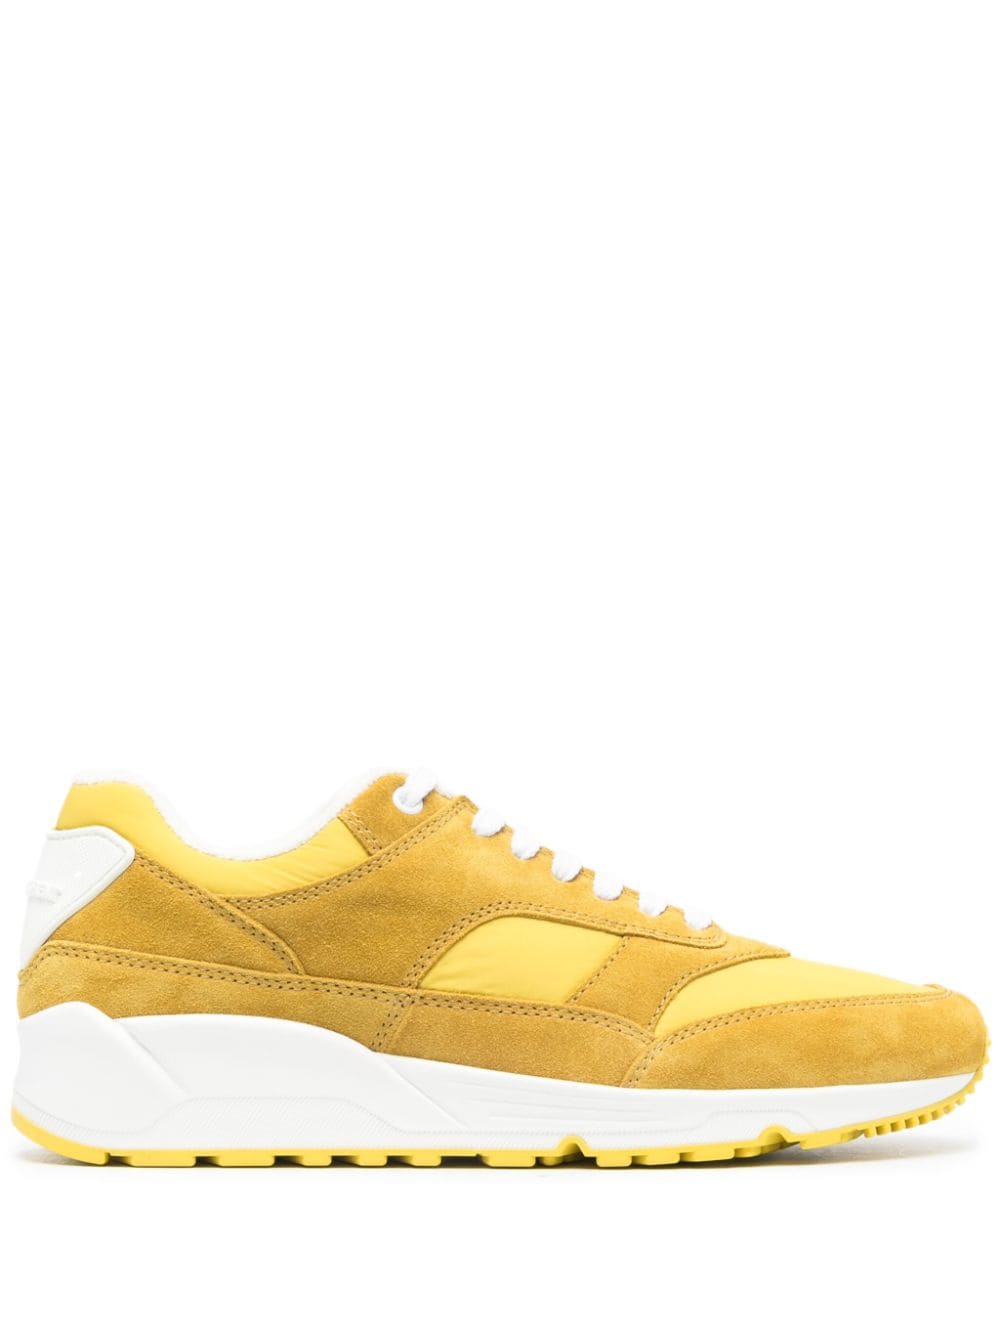 Saint Laurent Bump Leather Sneakers In Mustard Yellow